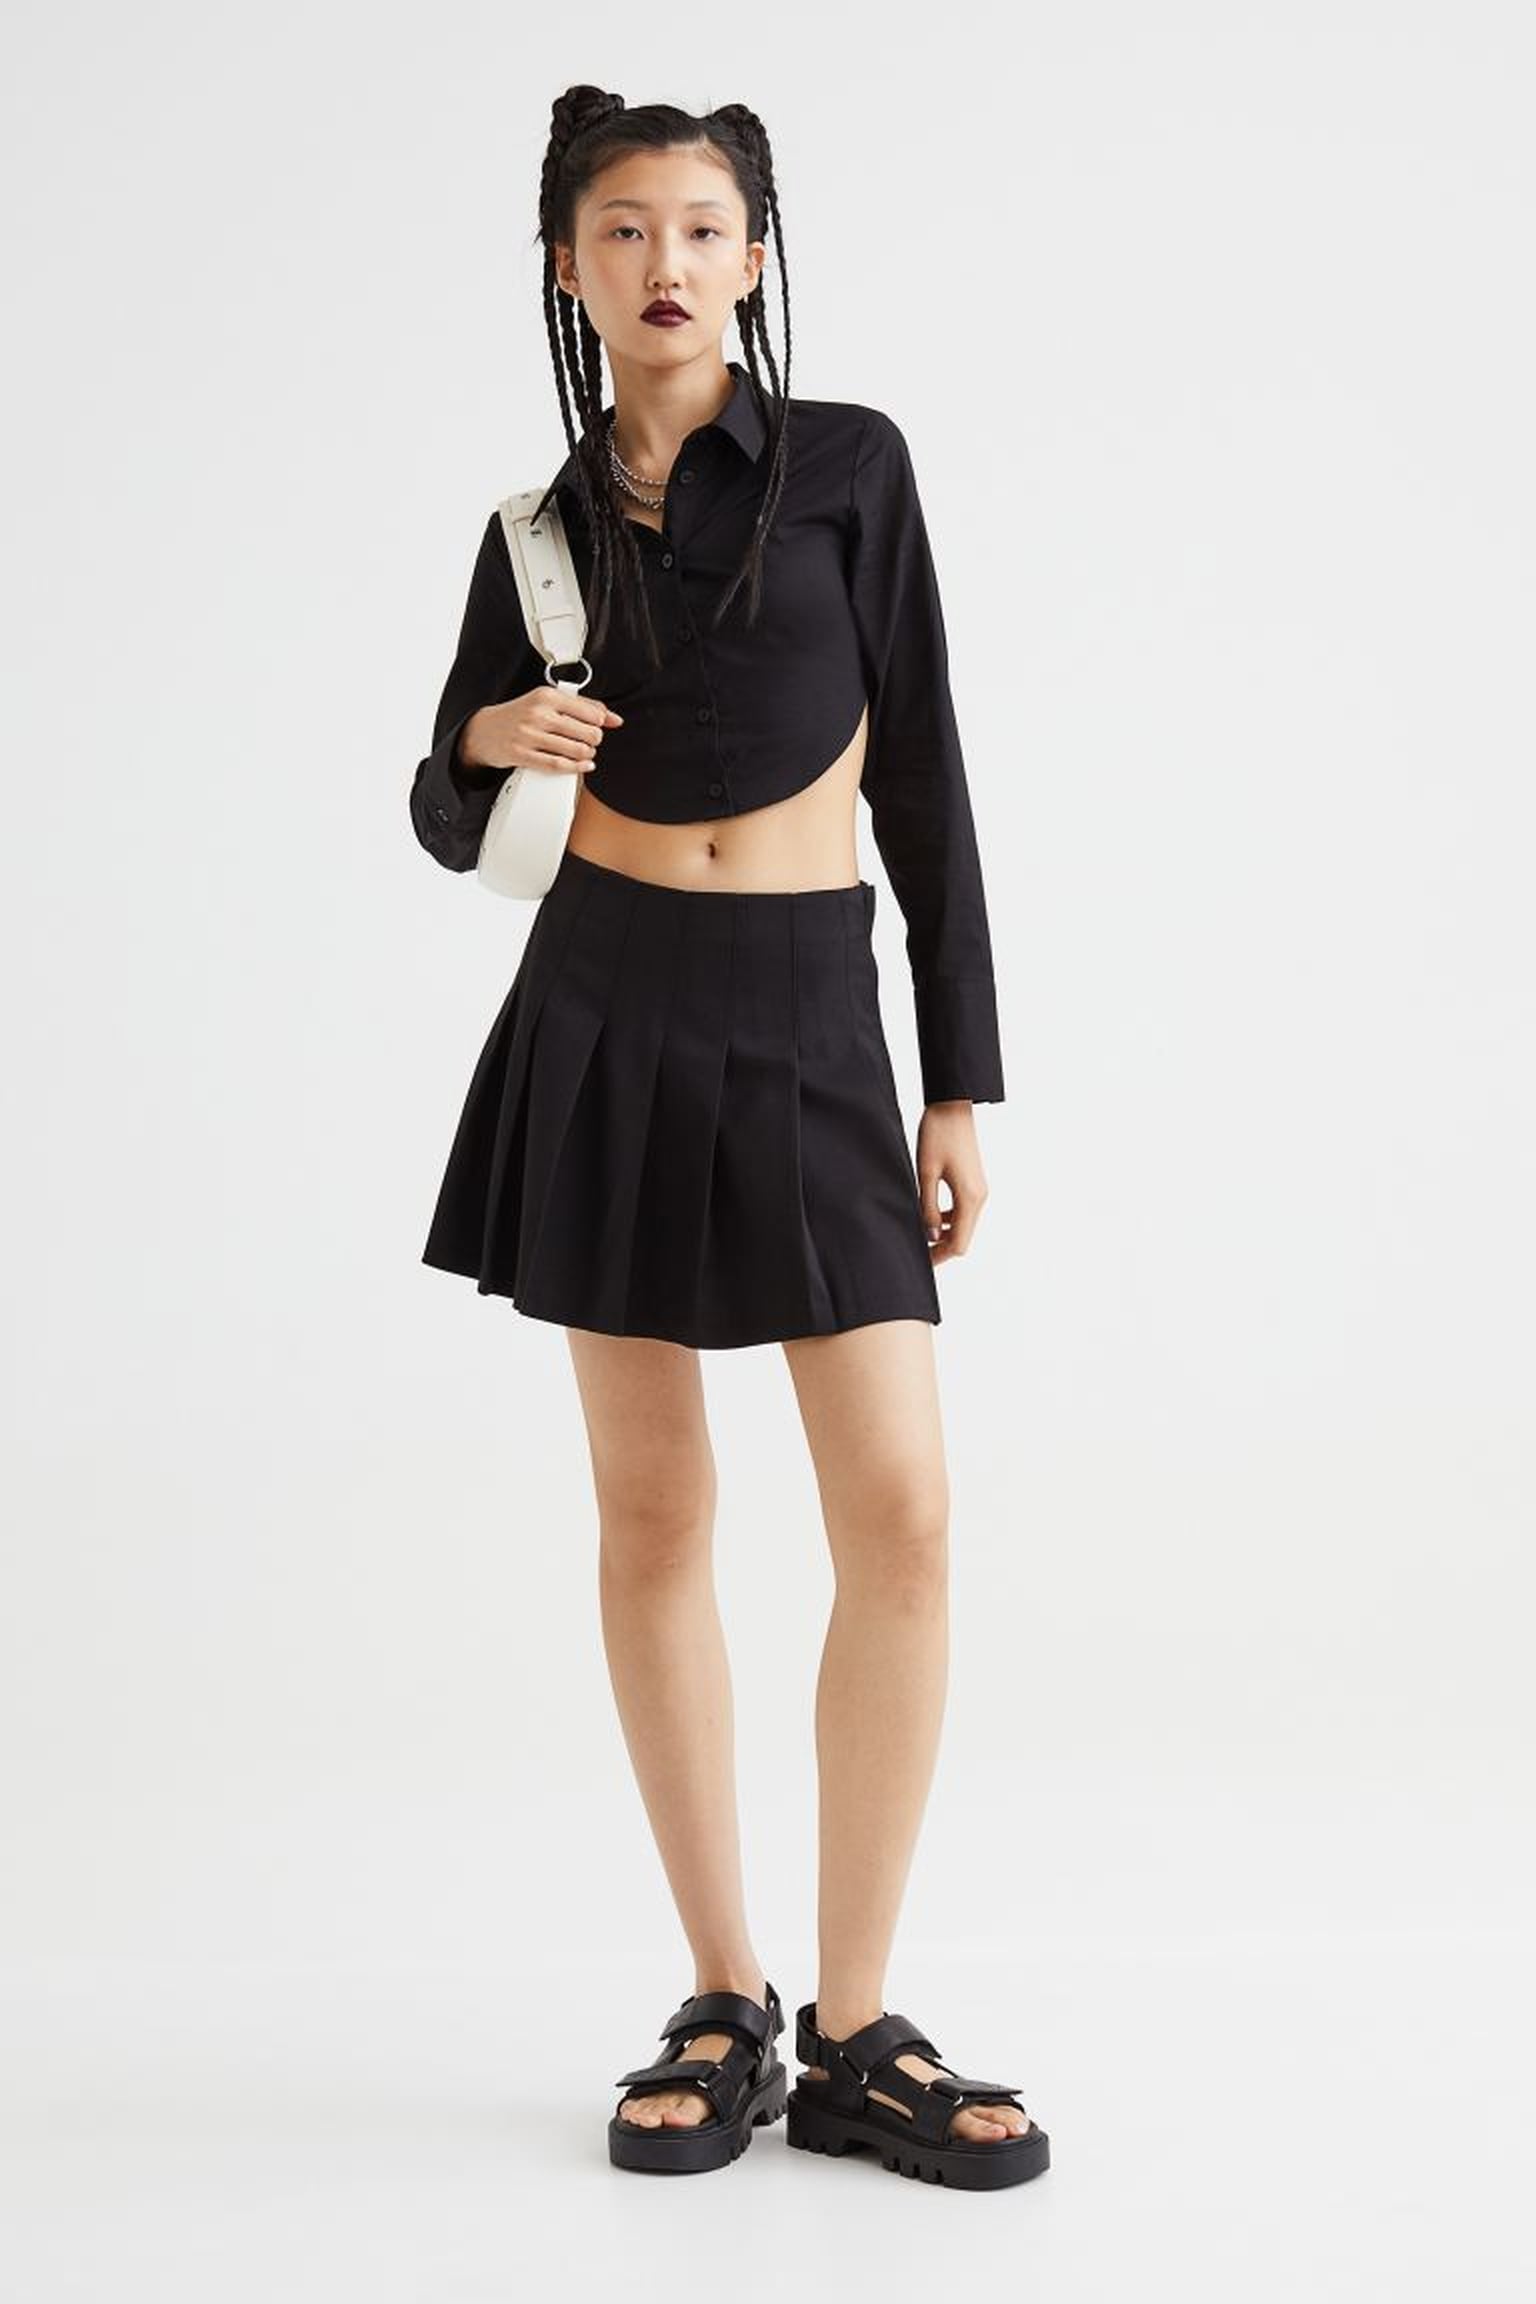 Best Short Skirts For Fall | POPSUGAR Fashion